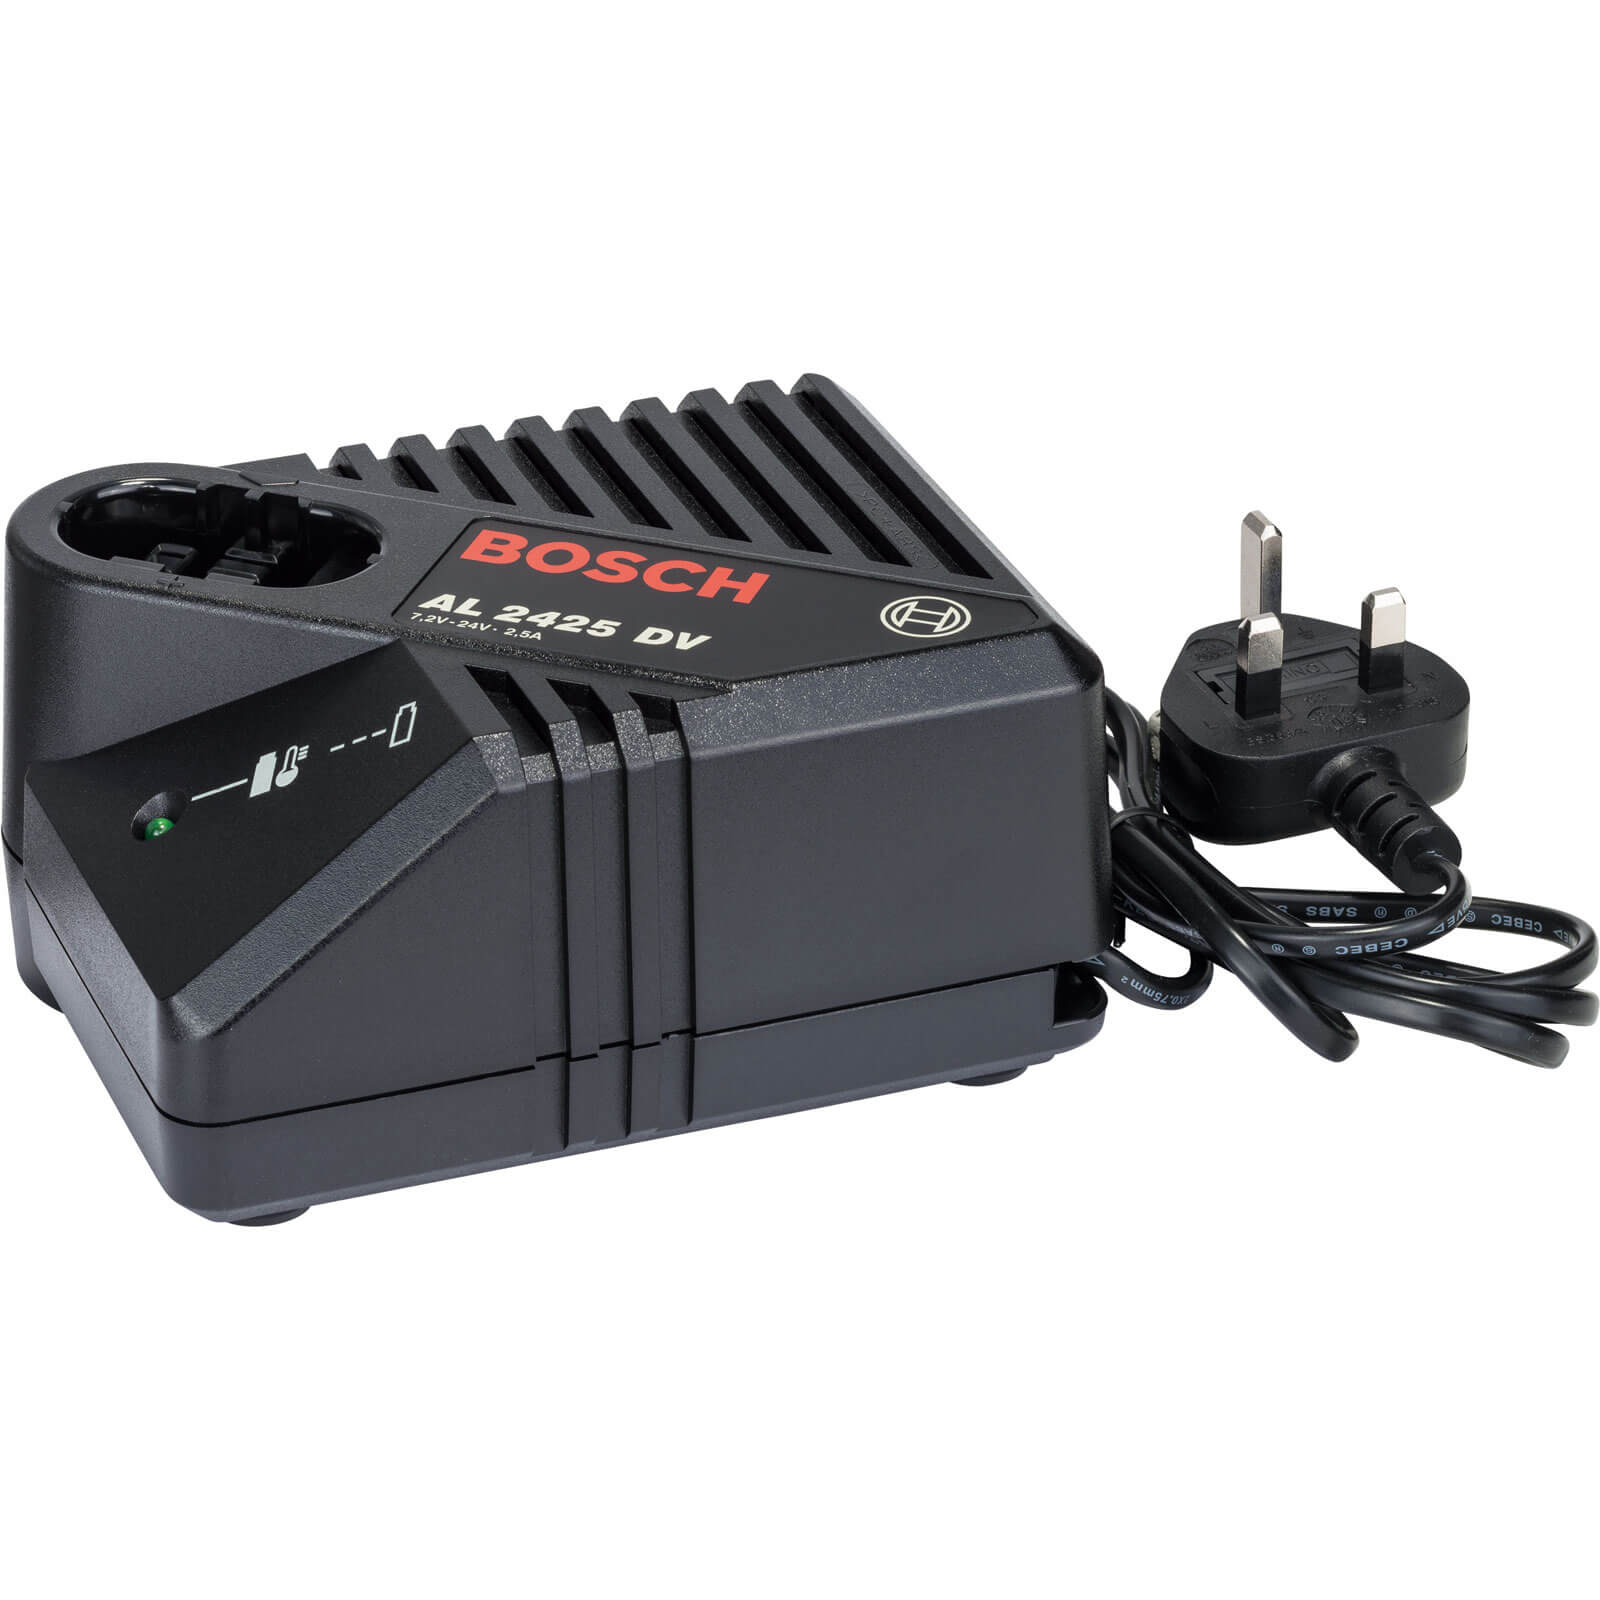 Bosch Chargeur AL-2425DV 7.2 V 10.8 V 14.4 V 18 V 24 V Outil Tools Battery Chager _ UE 